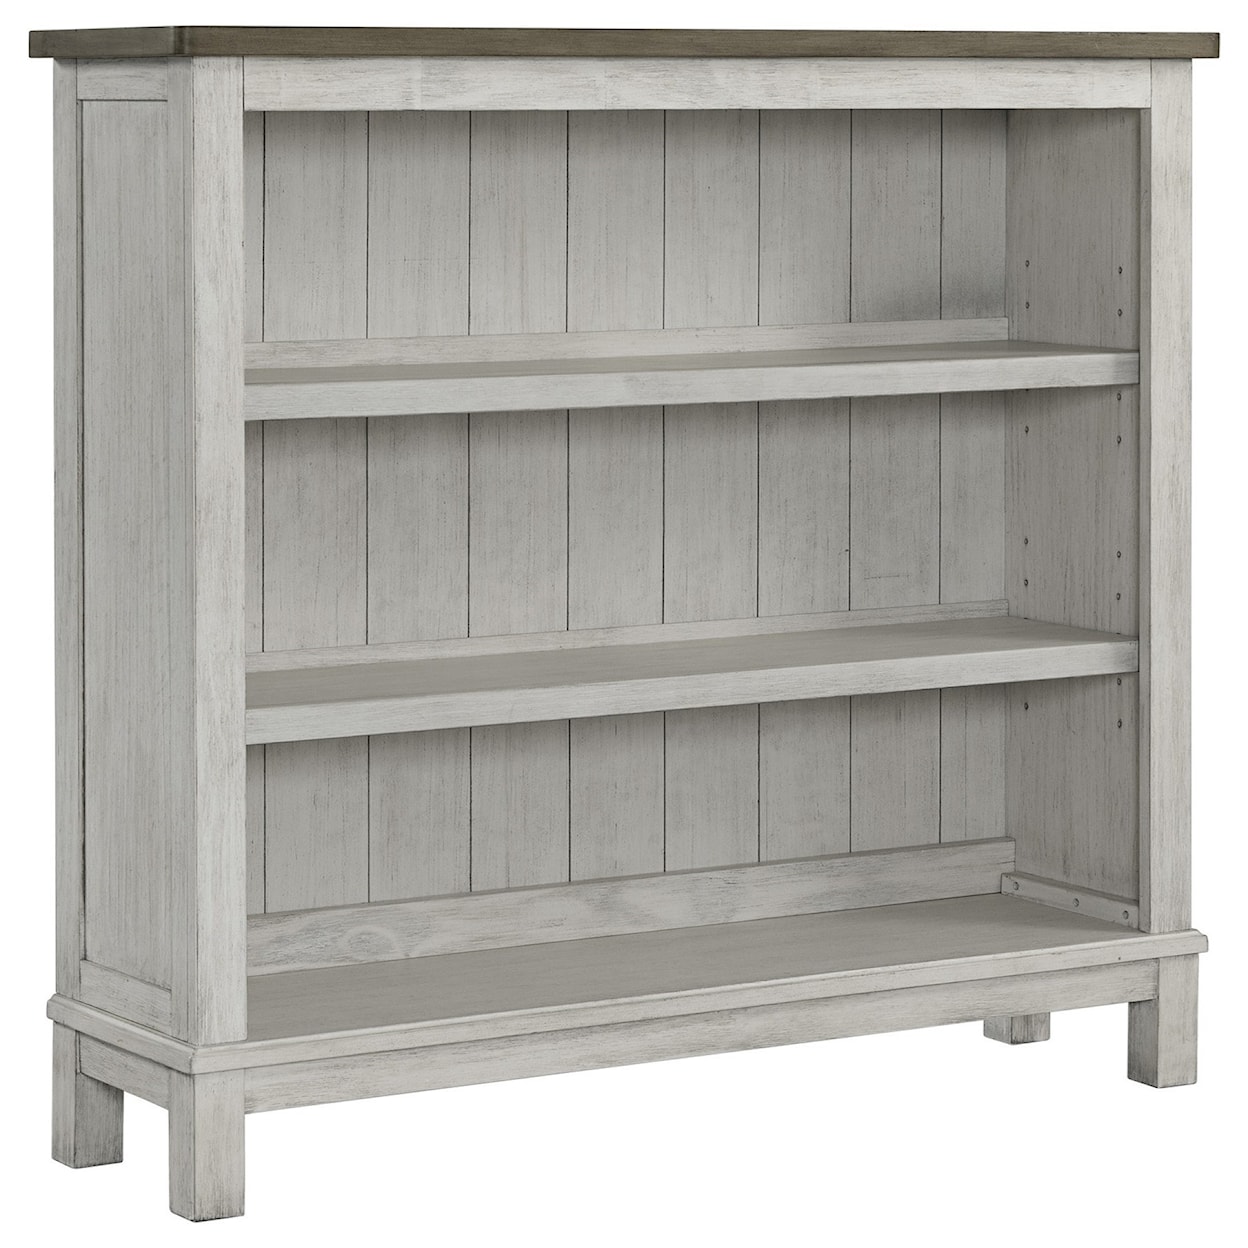 Westwood Design Timber Ridge Hutch Bookcase